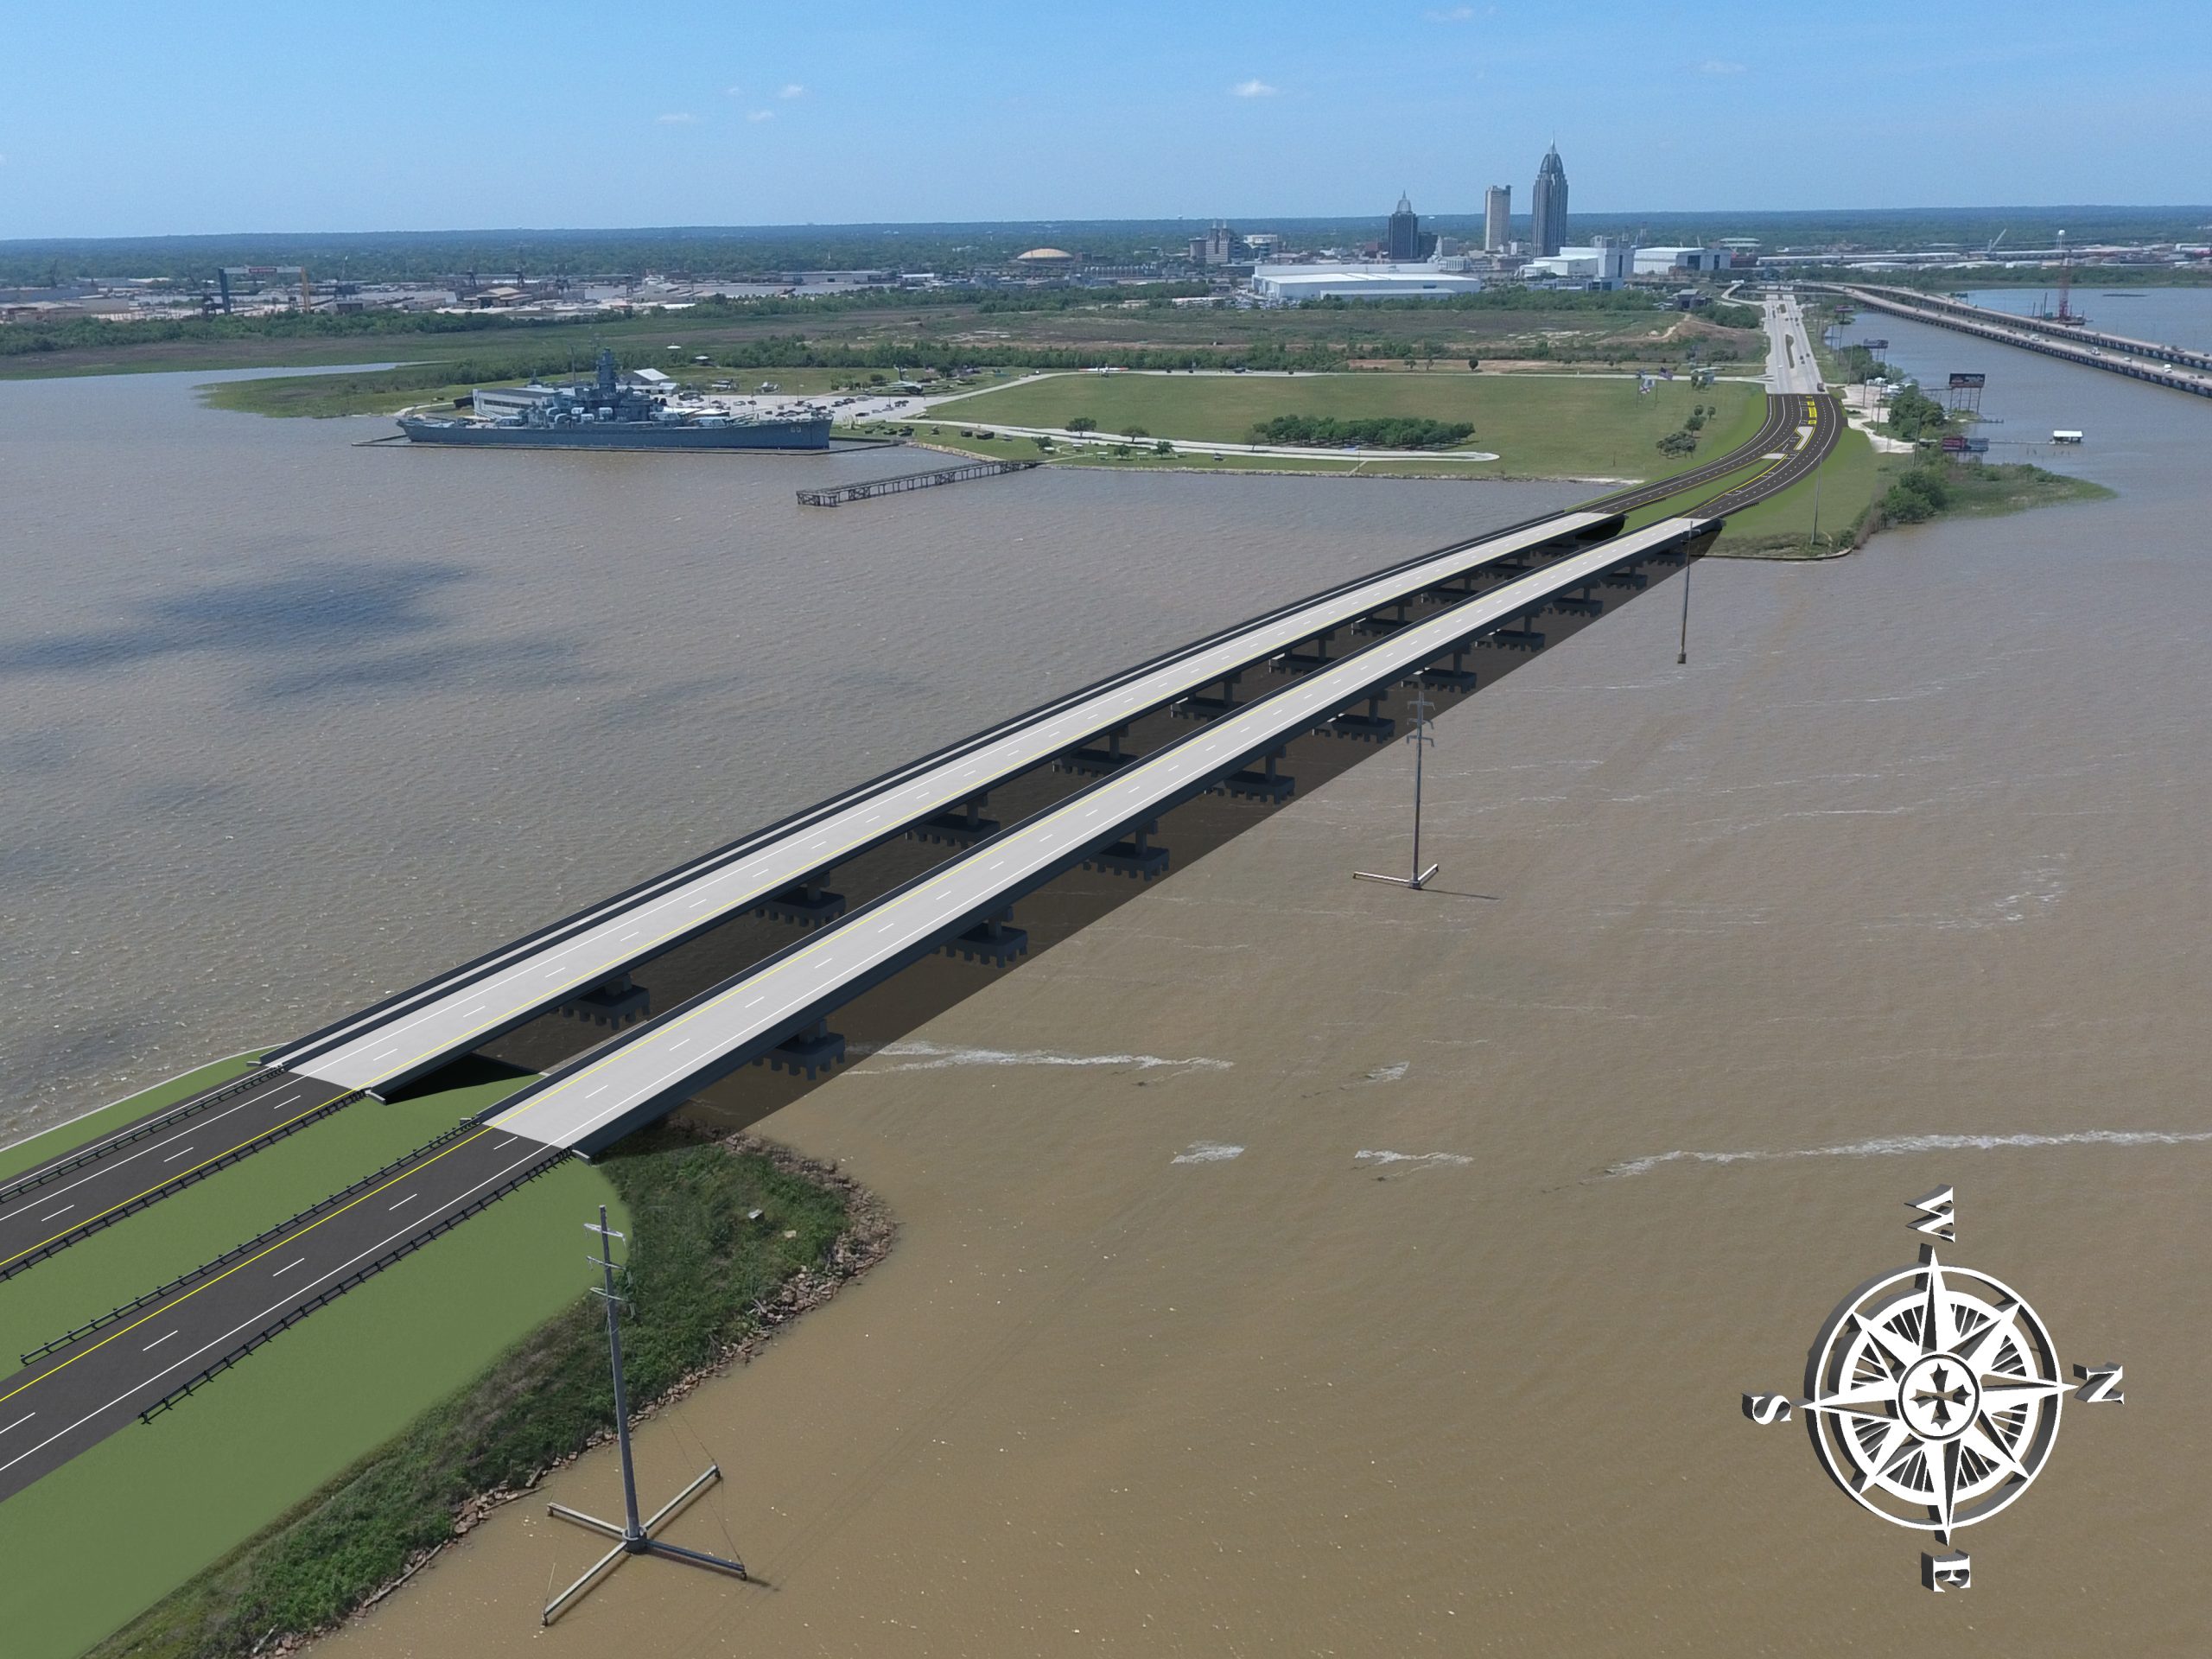 Artist rendering of the new Tensaw River Bridge in Mobile, Alabama.